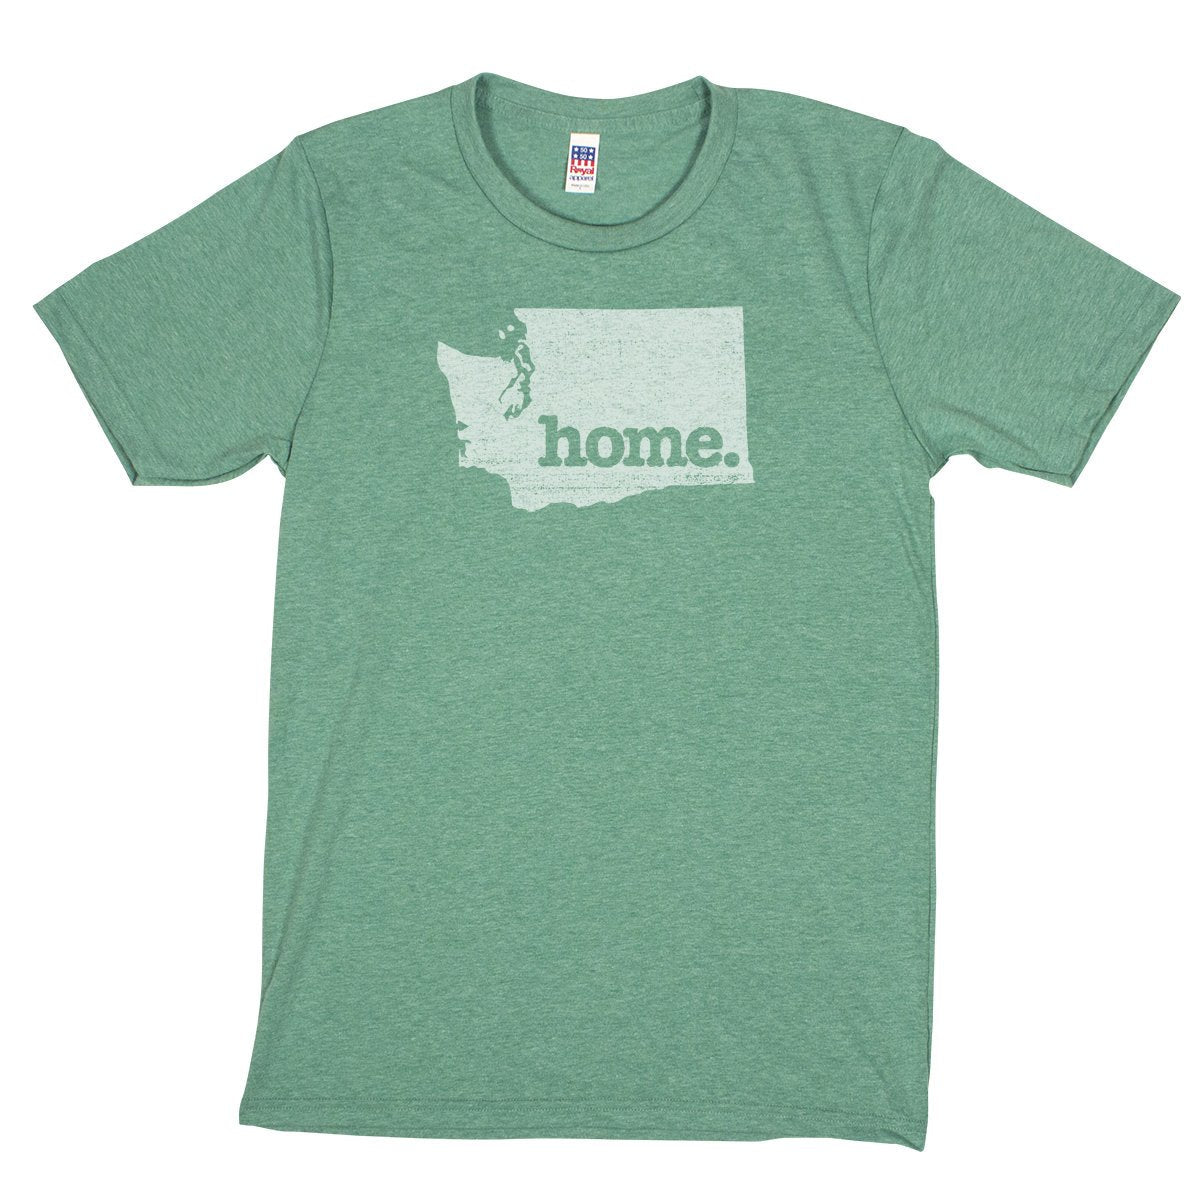 home. Men’s Unisex T-Shirt - Texas